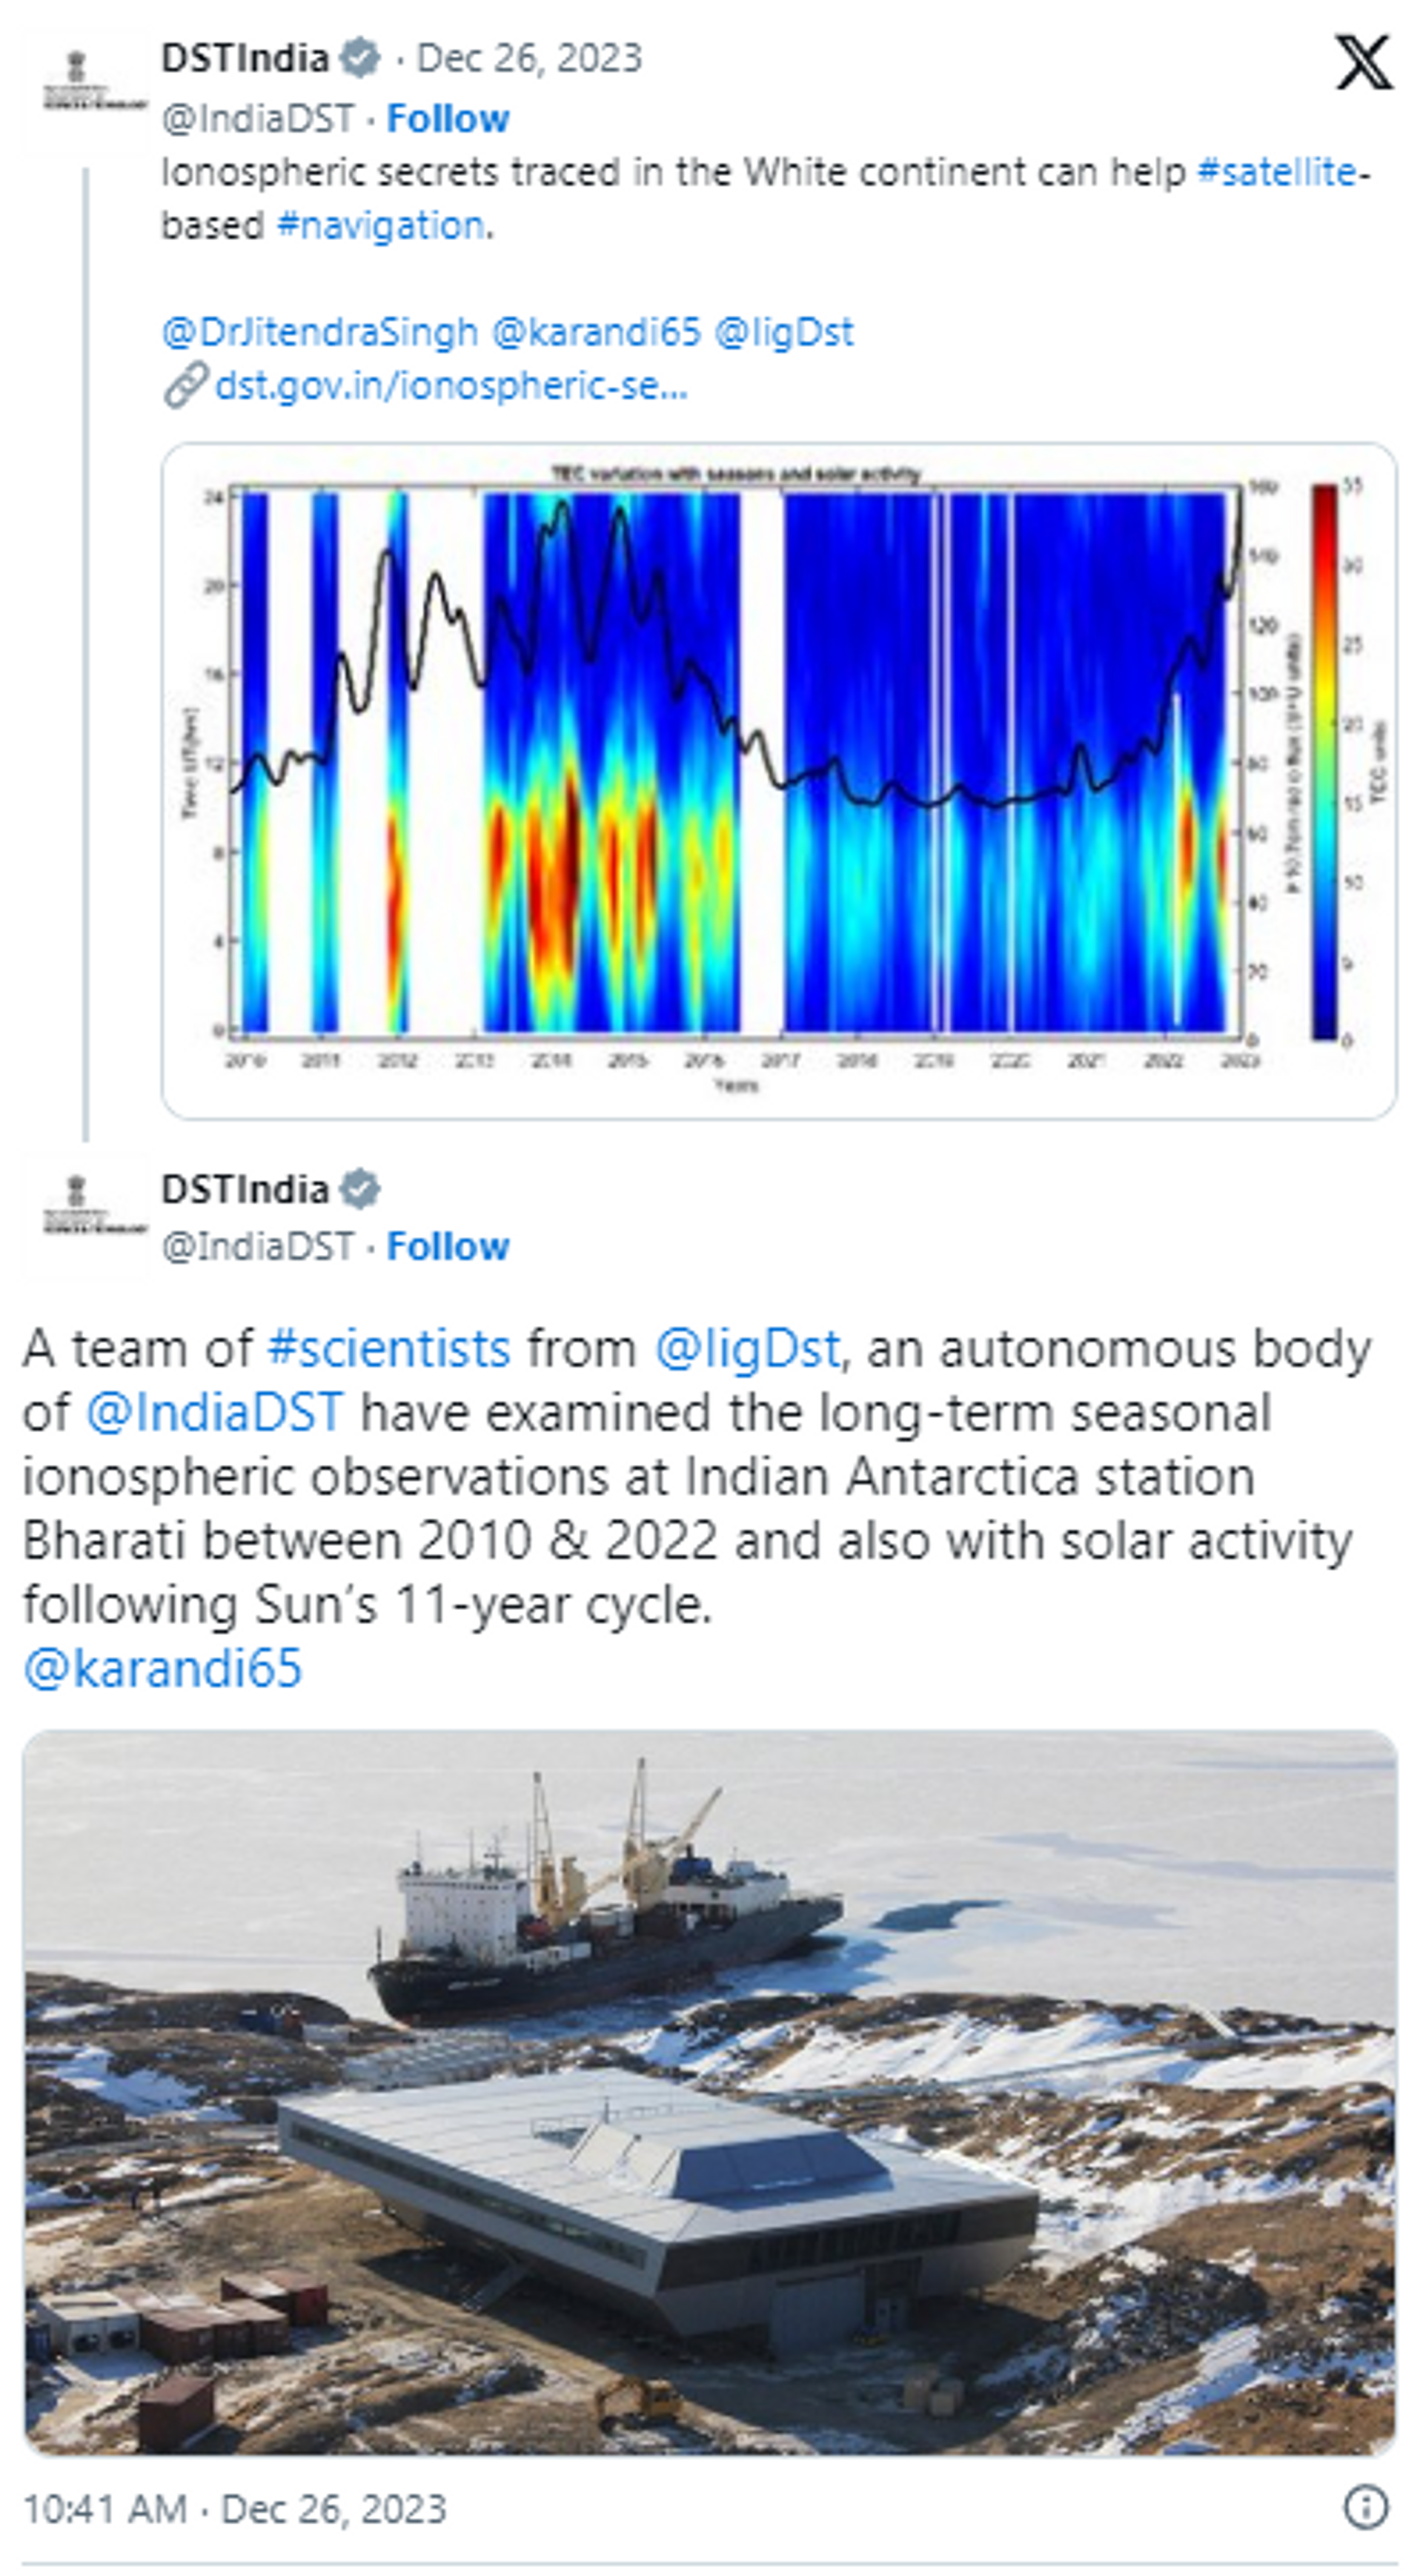 Scientists at Antarctica Uncover Ionospheric Secrets That Can Aid Navigation - Sputnik India, 1920, 27.12.2023